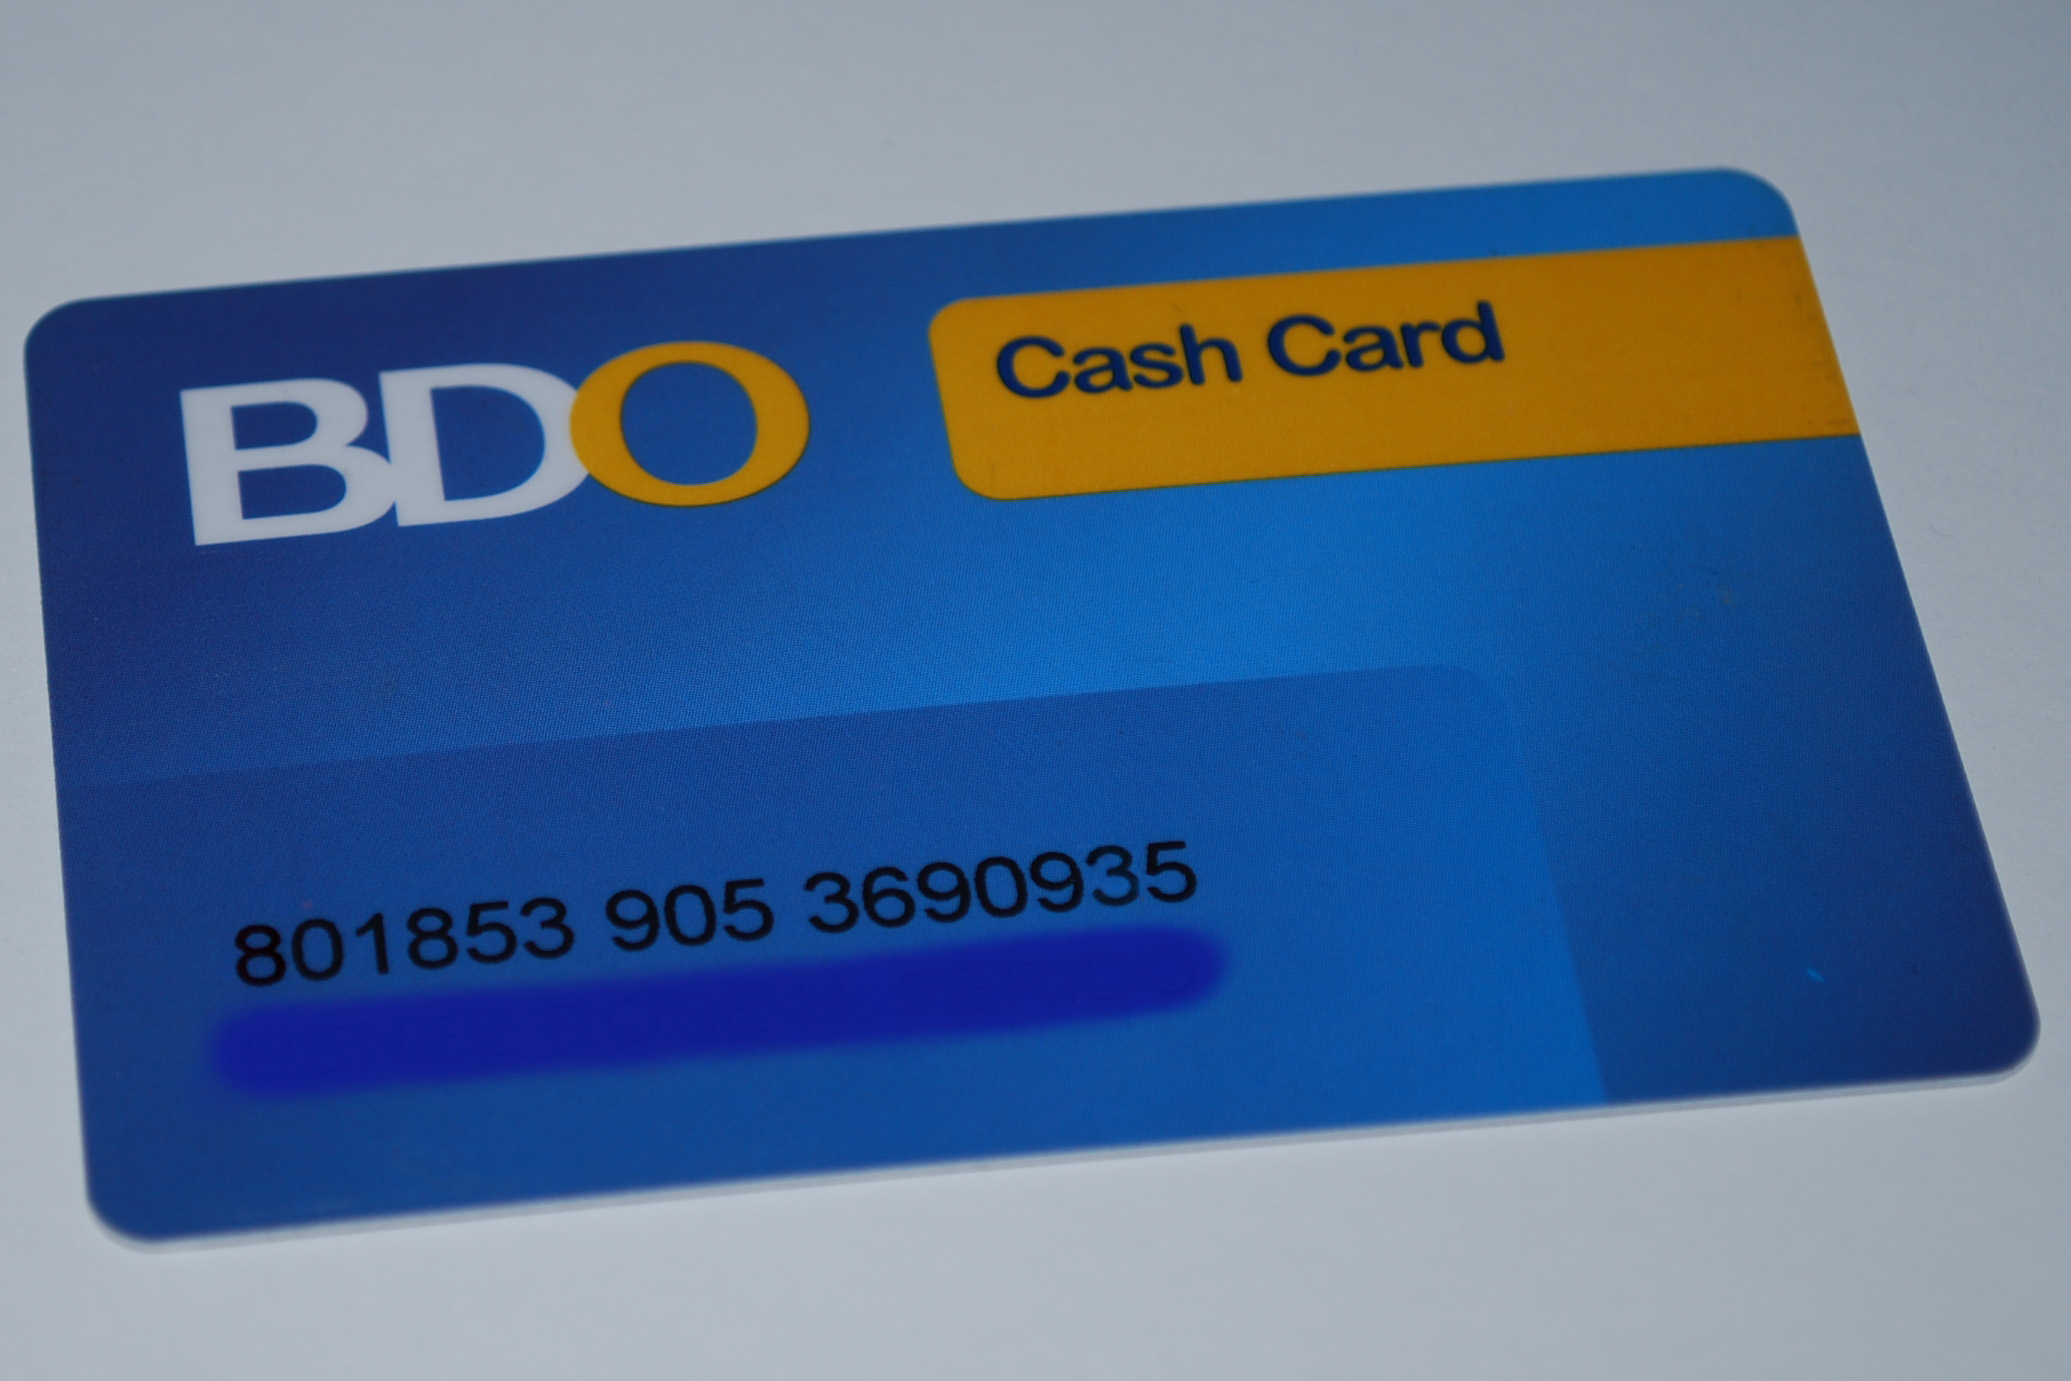 Just card. Cash карта. Банковская карта Eurobank. BDO Debit Card. Cash or Card.